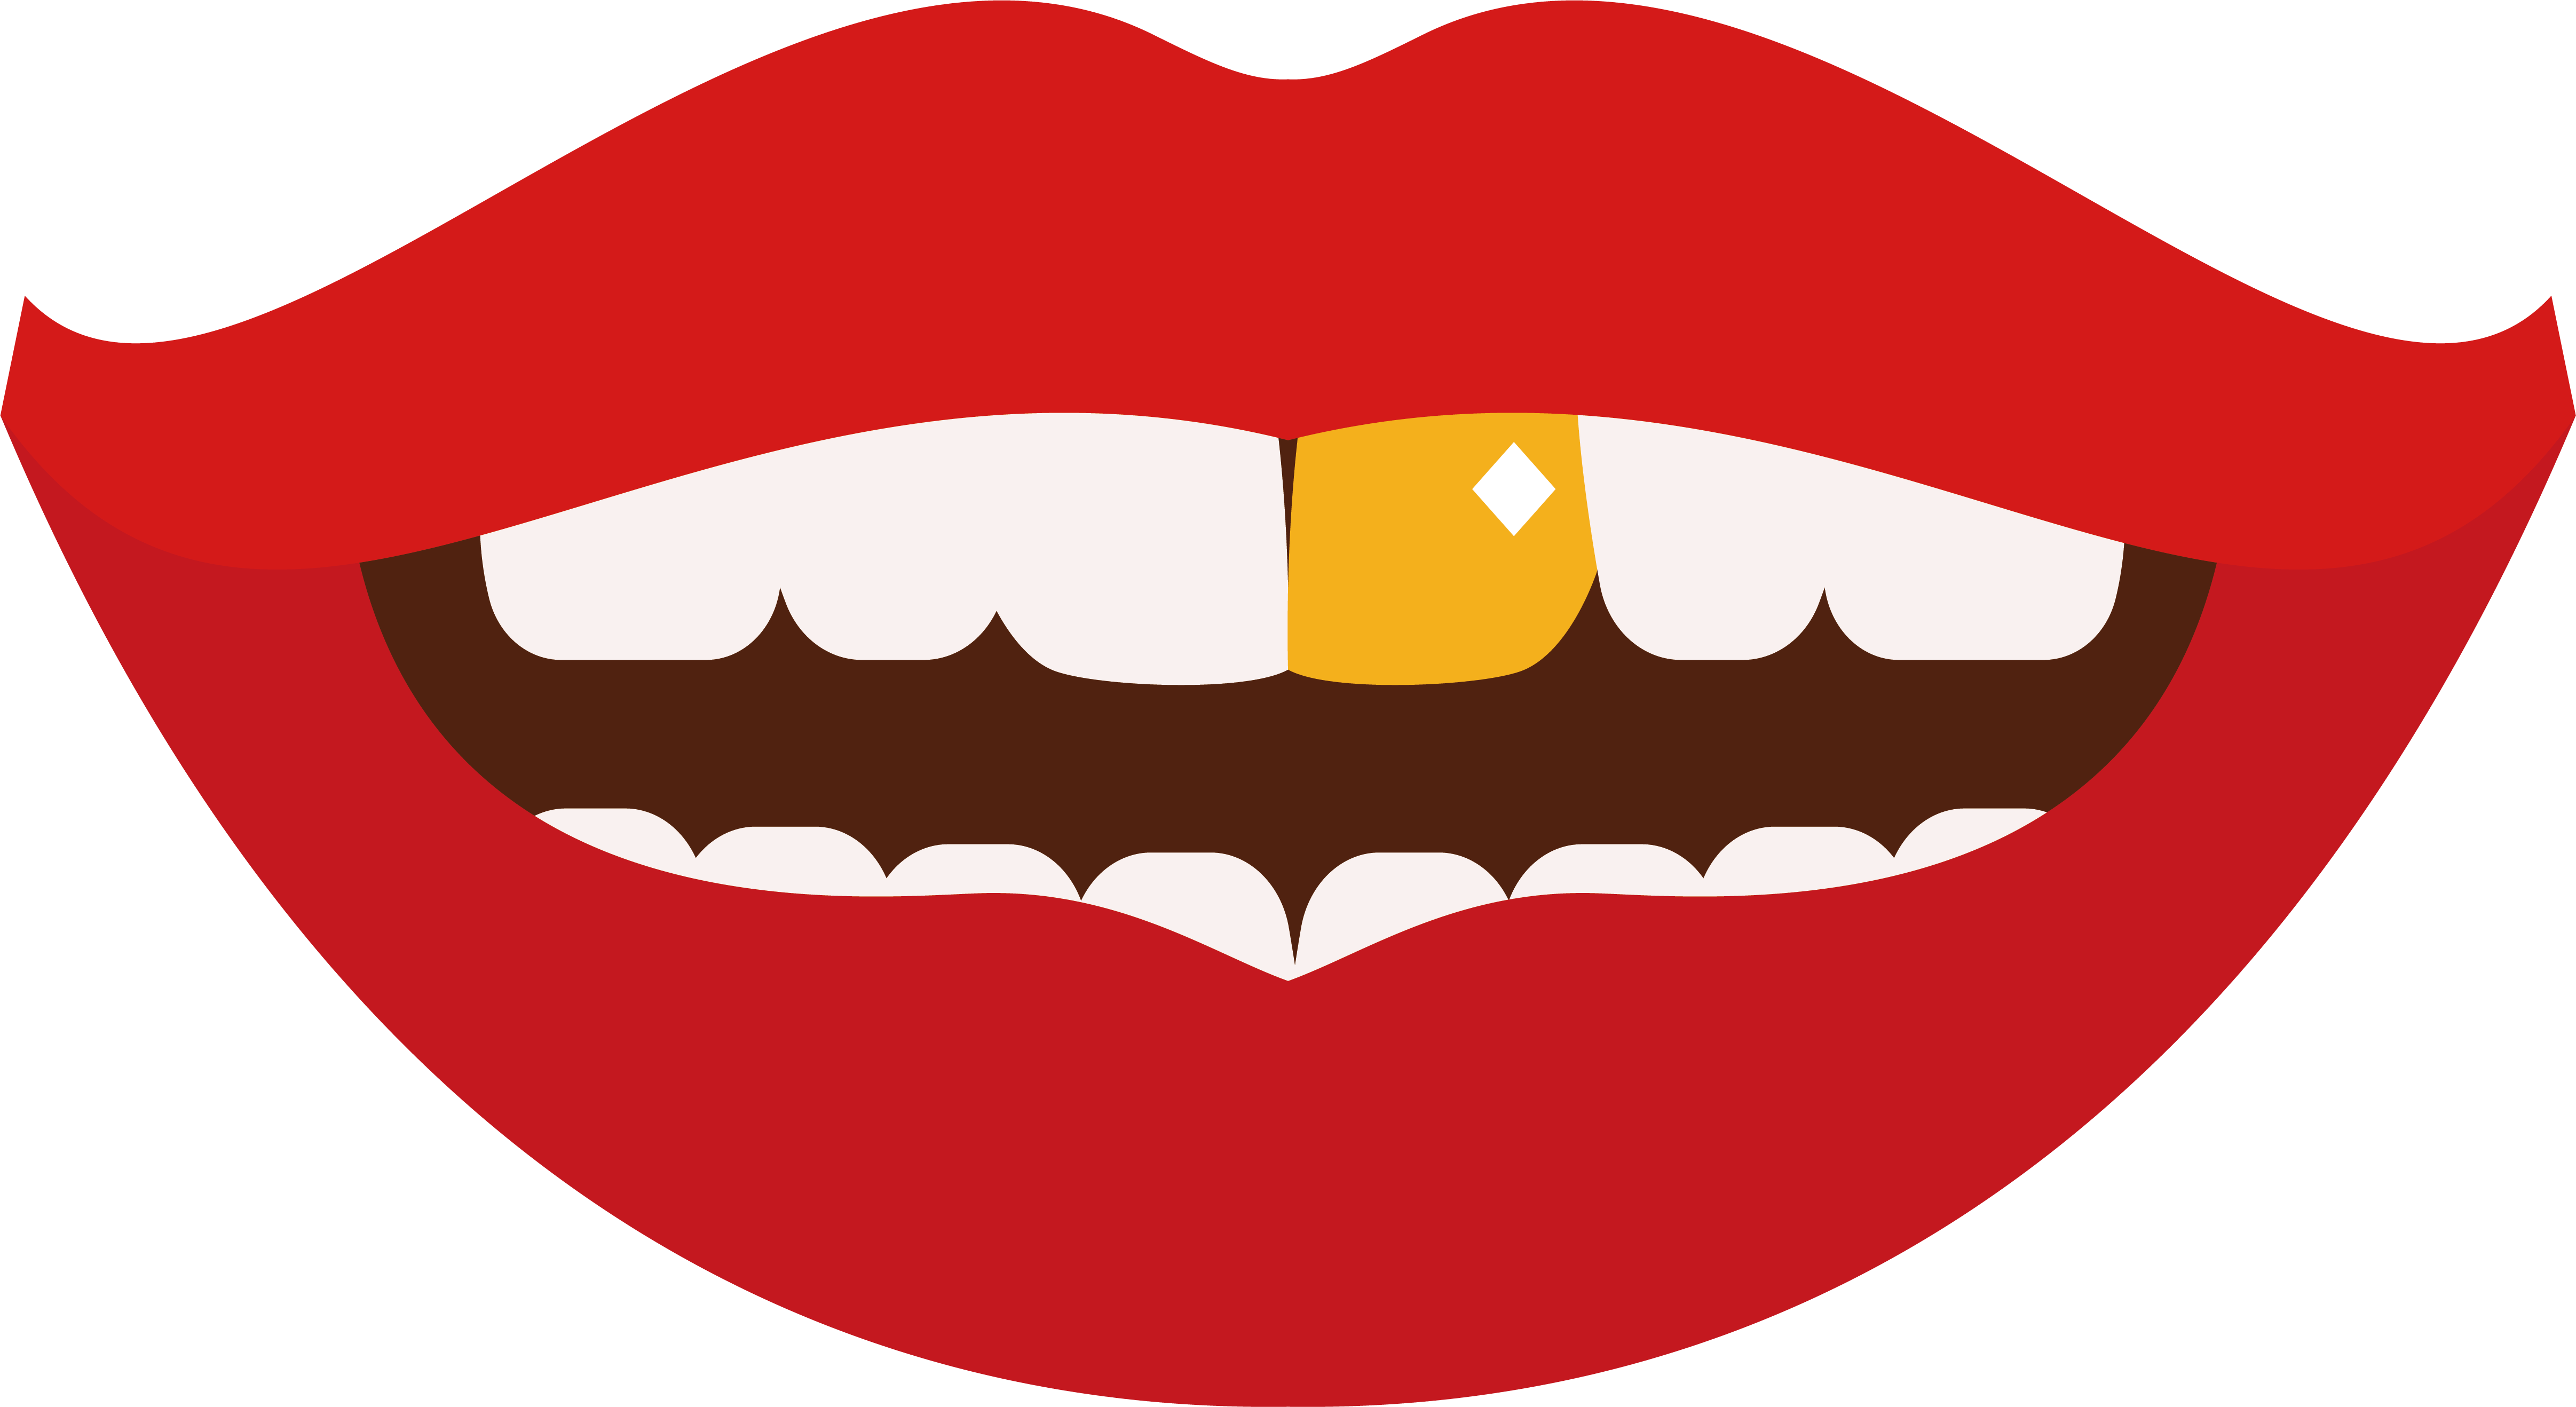 Clipart mouth dientes, Picture #603230 clipart mouth dientes.